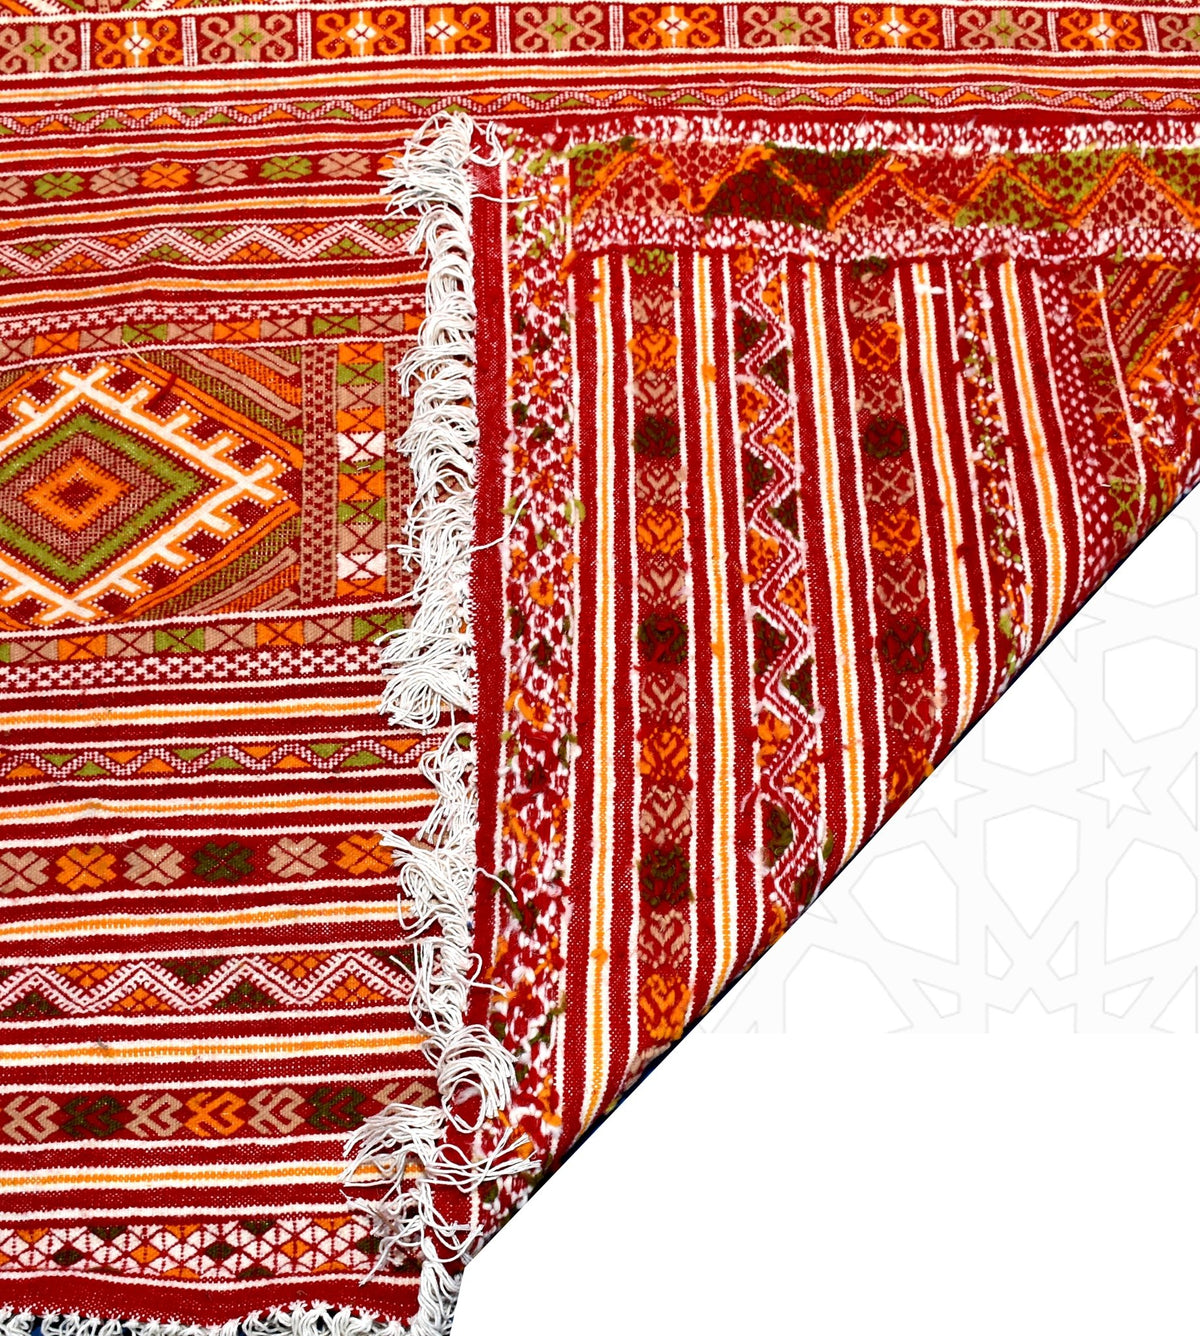 Flatweave kilim hanbal Moroccan rug - 4.27 x 5.91 ft / 130 x 180